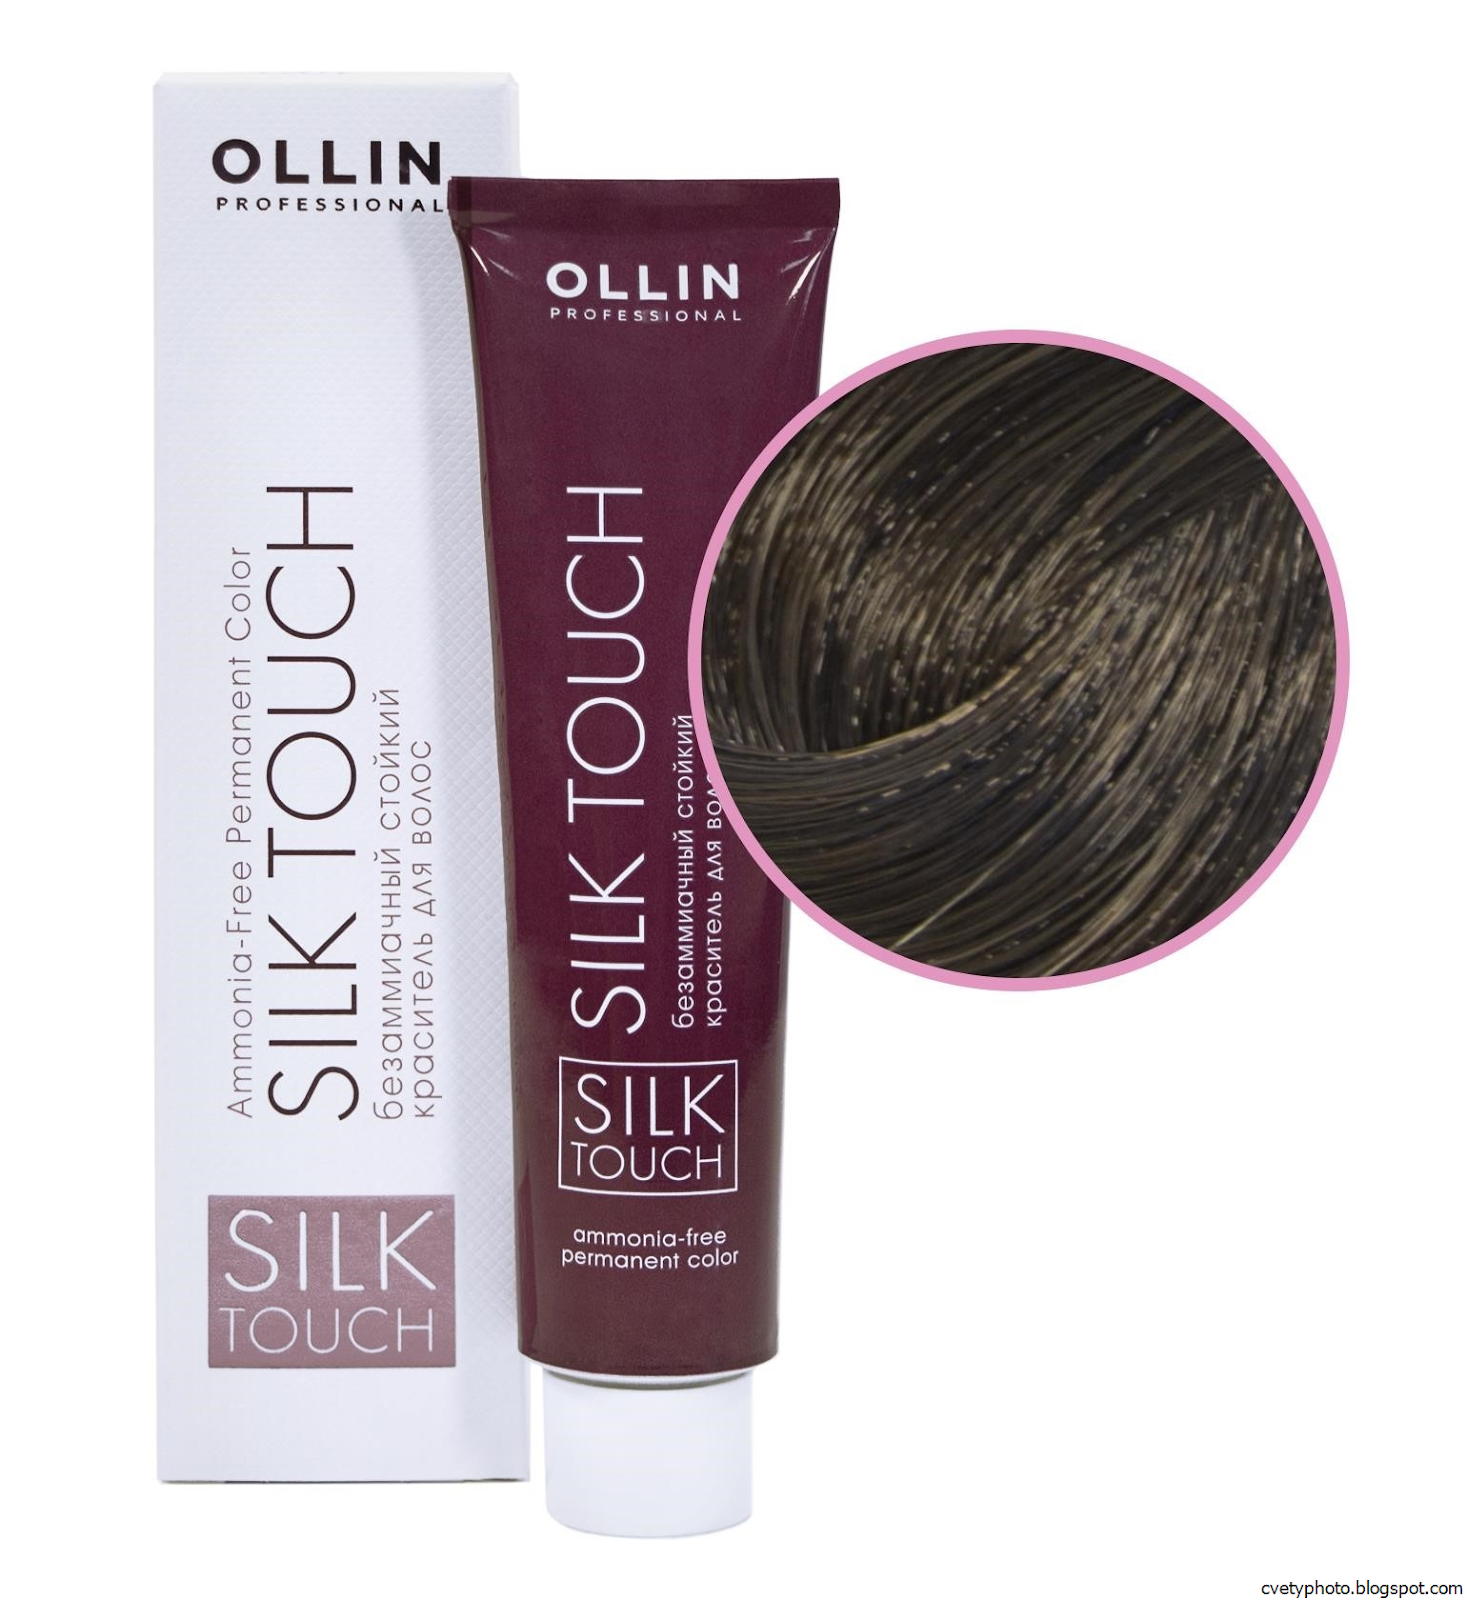 Оллин палитра красок для седых. Ollin Silk Touch 5/09. Ollin Silk Touch безаммиачная краска. Оллин Silk Touch палитра 5.7. Краска Силк тач 8/72.